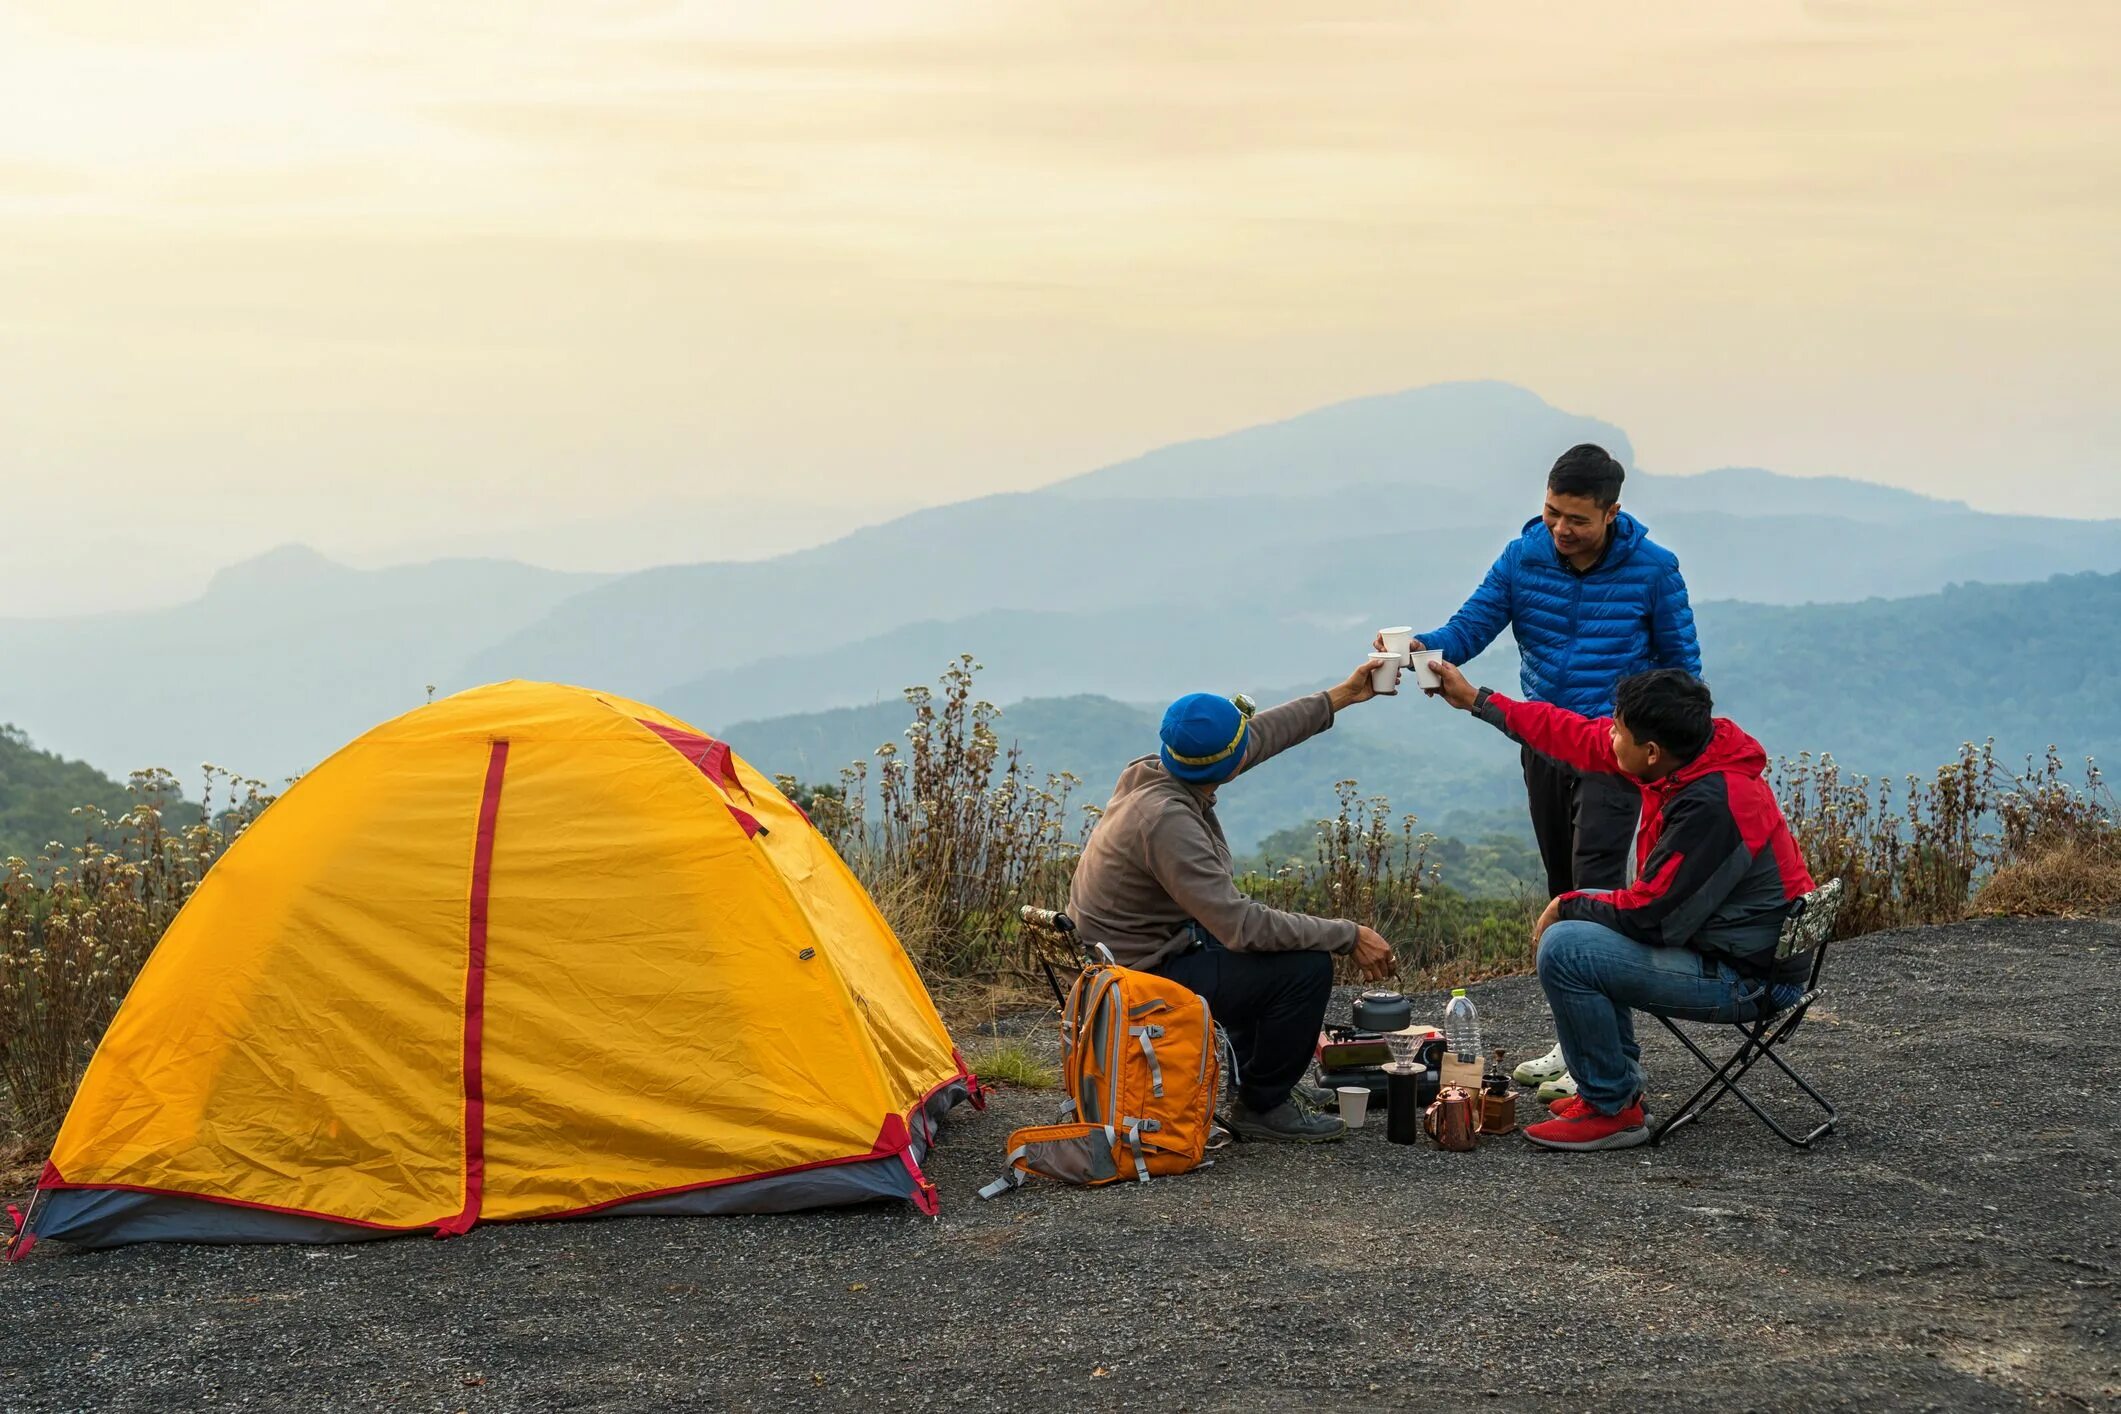 Hiking Camping. Camper Hiker. Cykling Hiking Camping. Философия кемпинга. Camp guide